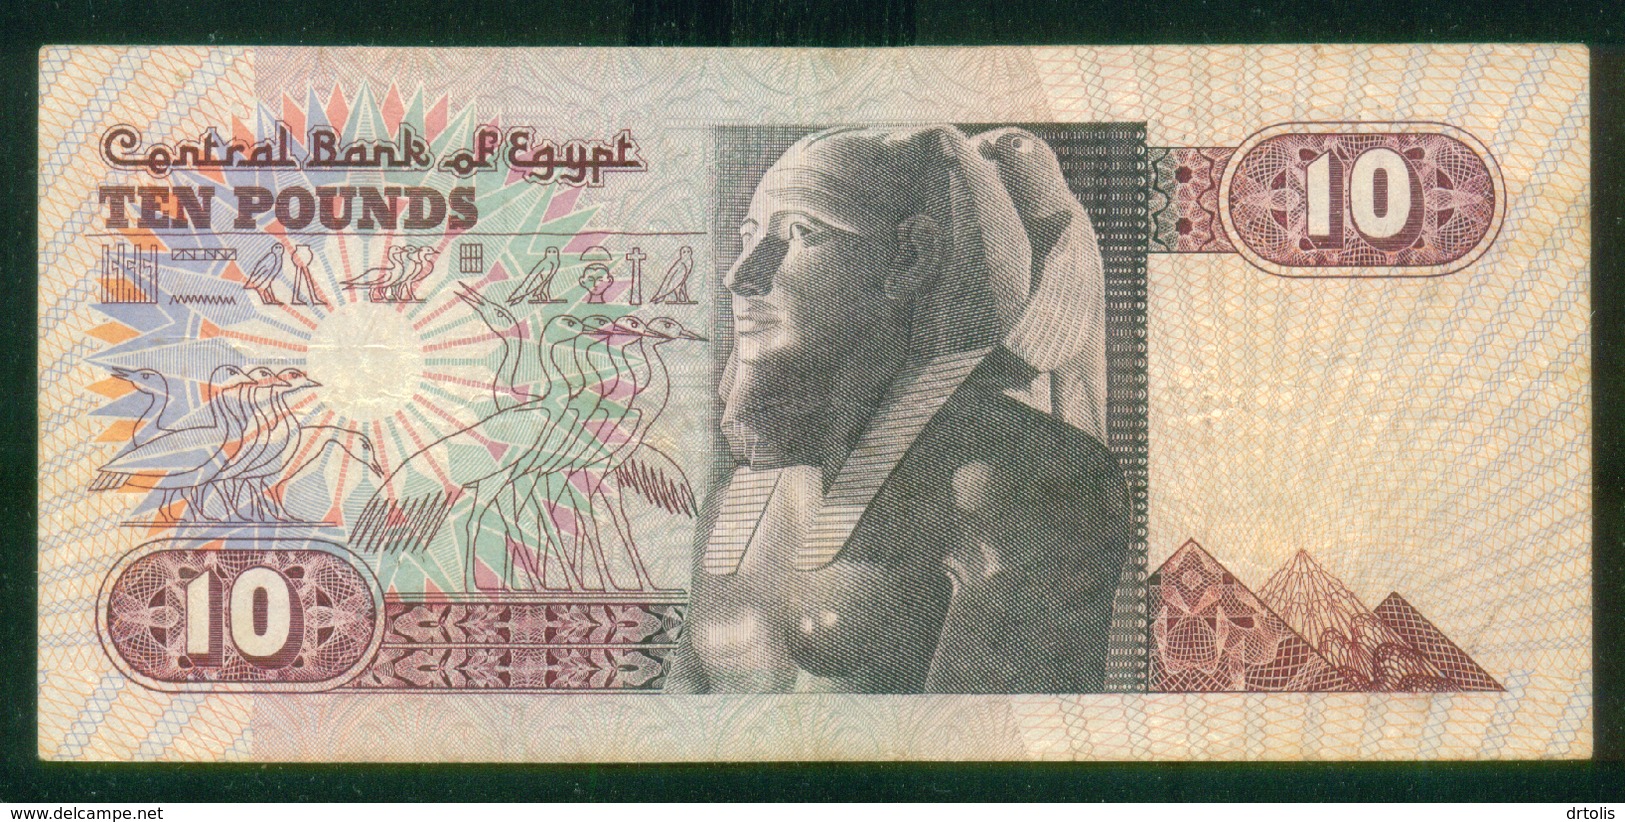 EGYPT / 10 POUNDS / DATE : 13-7-1999 / P- 51 ( 5 ) / PREFIX : 187 / USED / ISLAM / MOSQUE / ARCHEOLOGY / BIRDS - Egipto